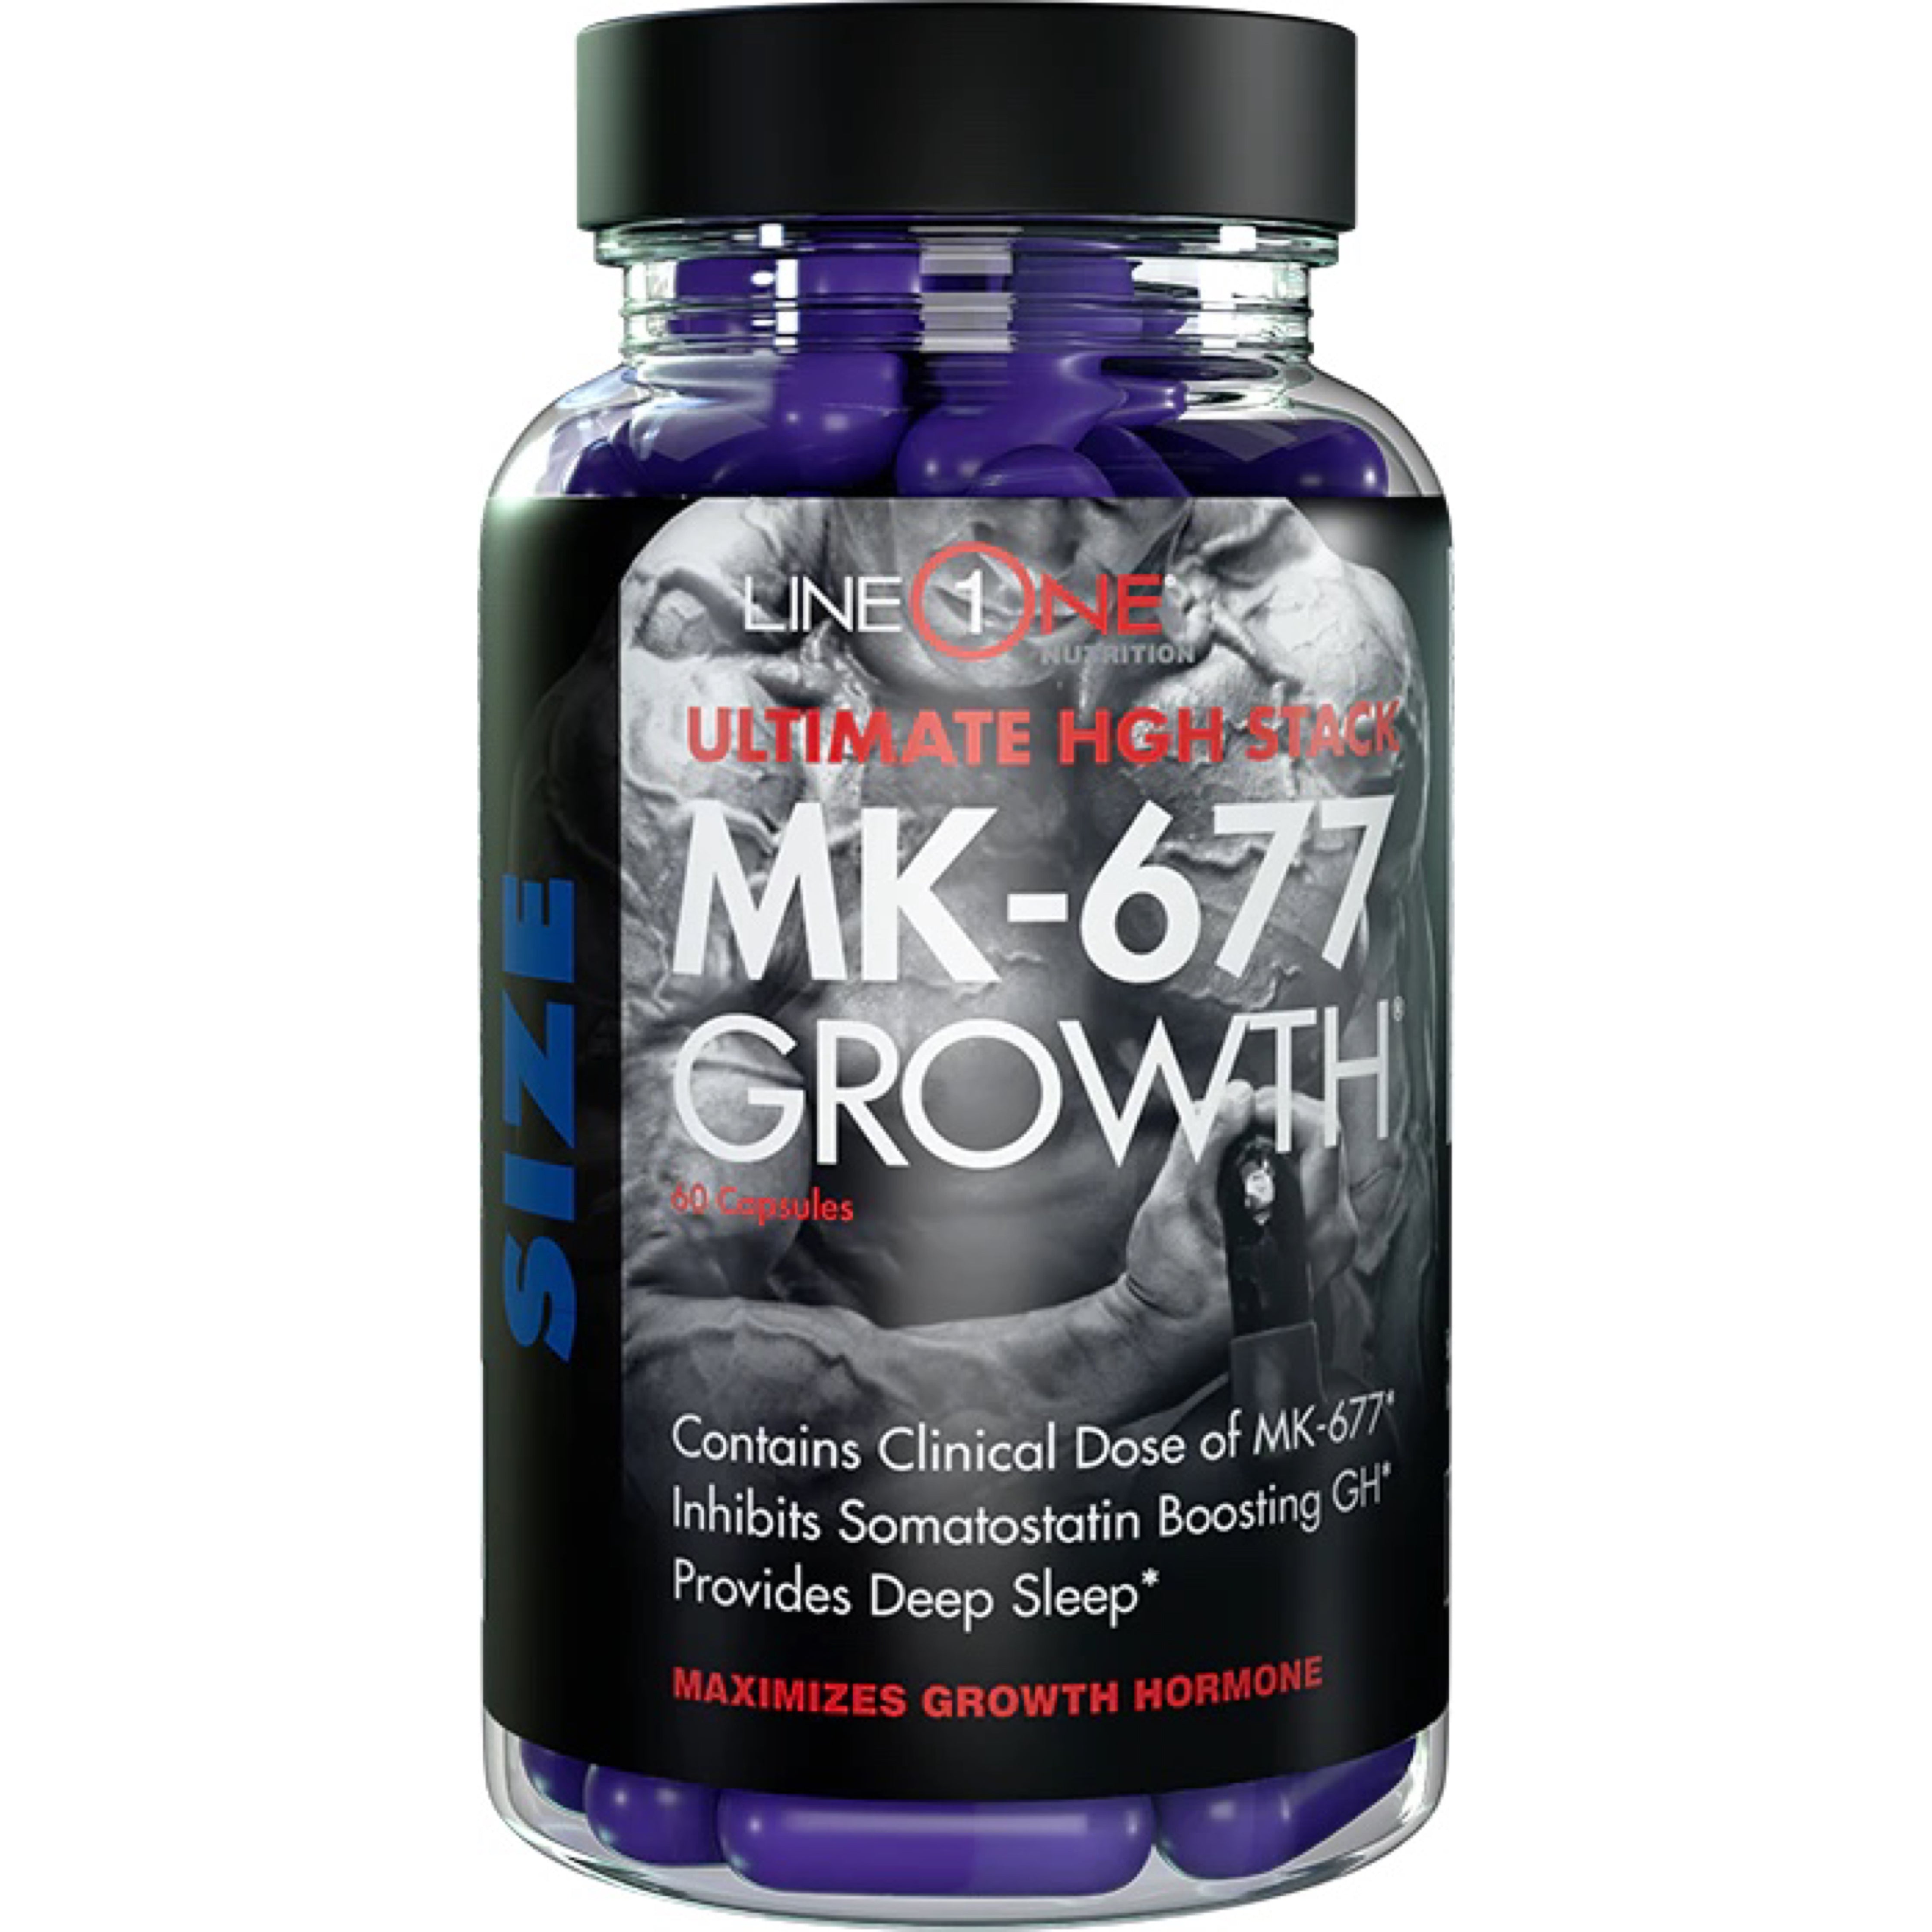 MK-677 GROWTH – GYFITNESS TRAINING & WELLNESS CENTER